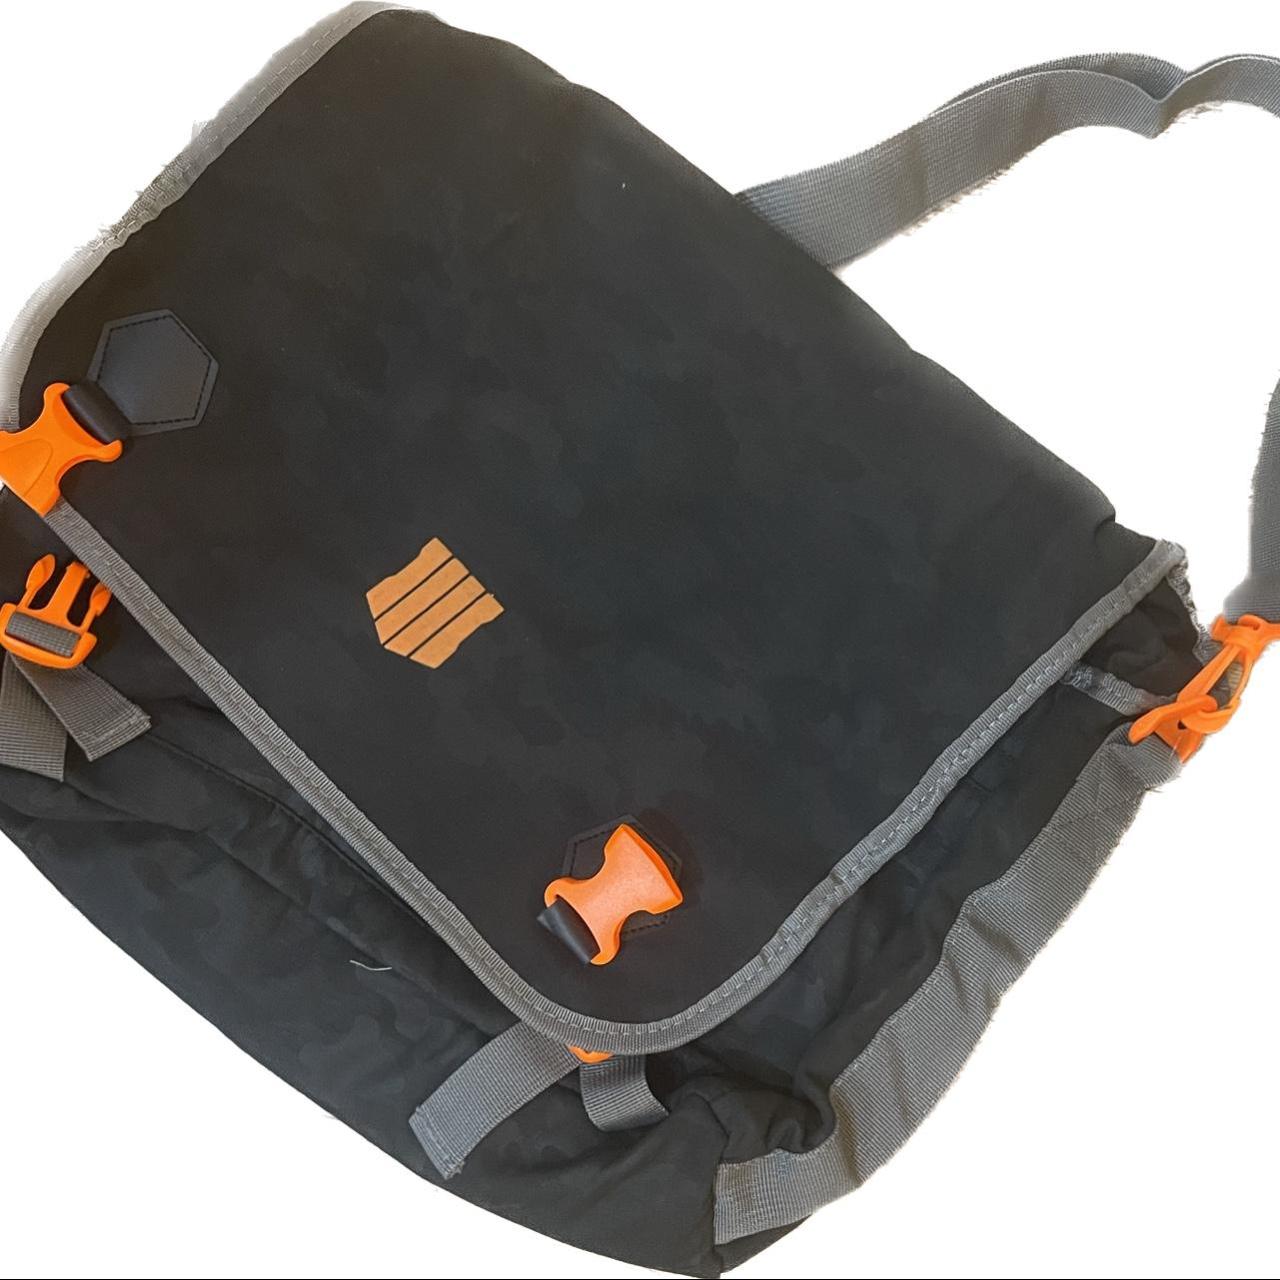 Timbuk2 Navy Blue Messenger Bag Laptop Briefcase • - Depop